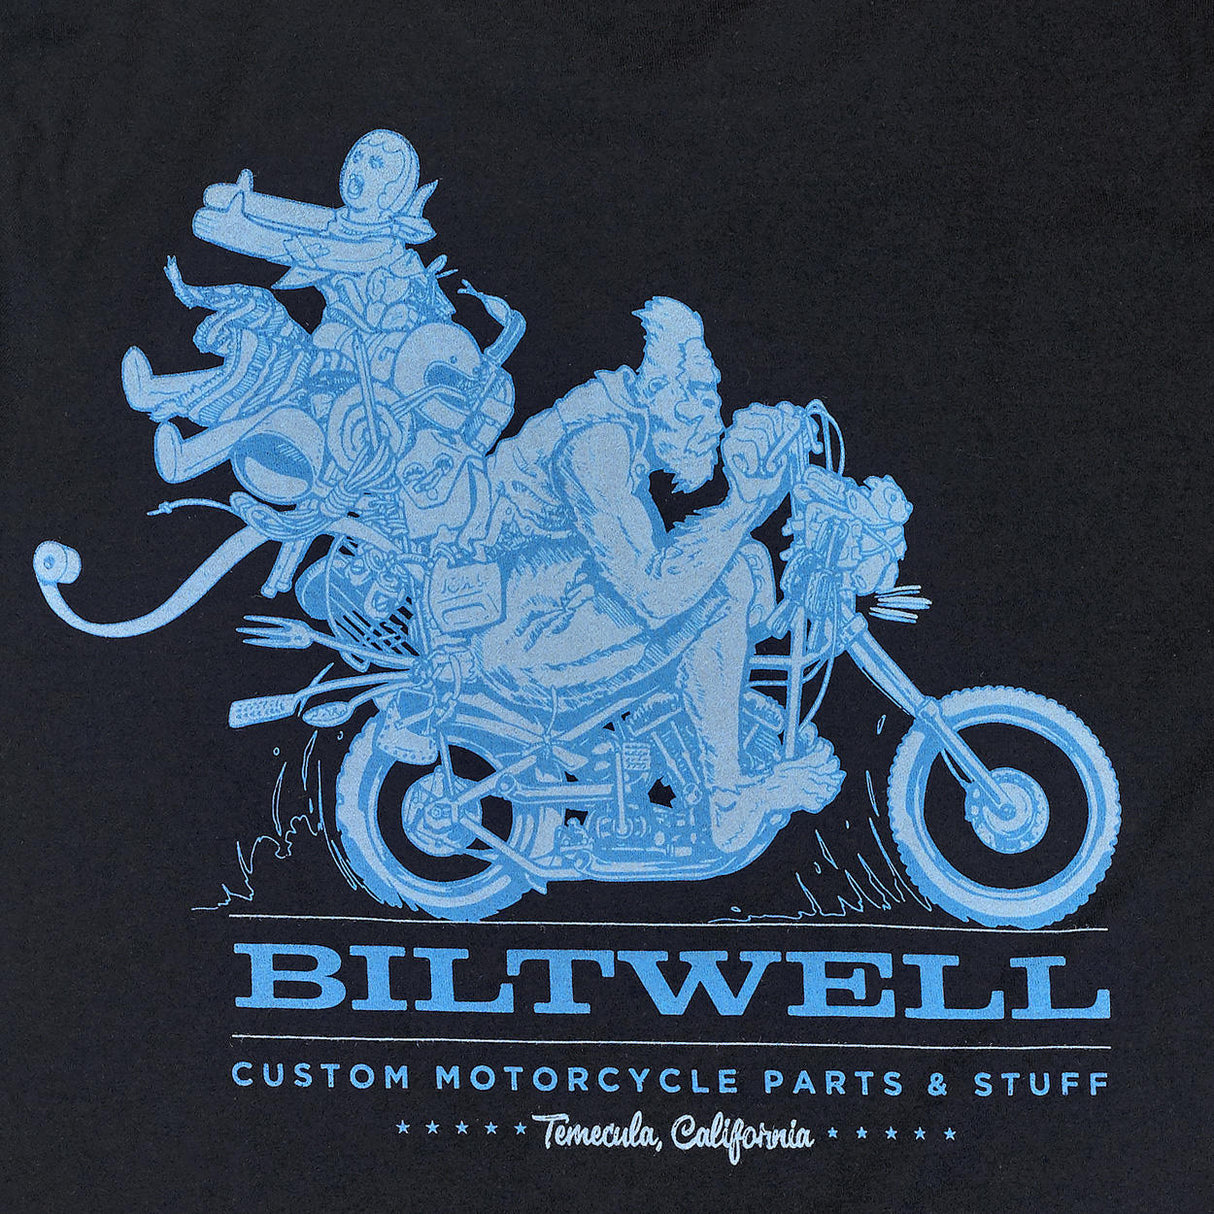 Biltwell Bigfoot T-Shirt - Black - MotoHeaven